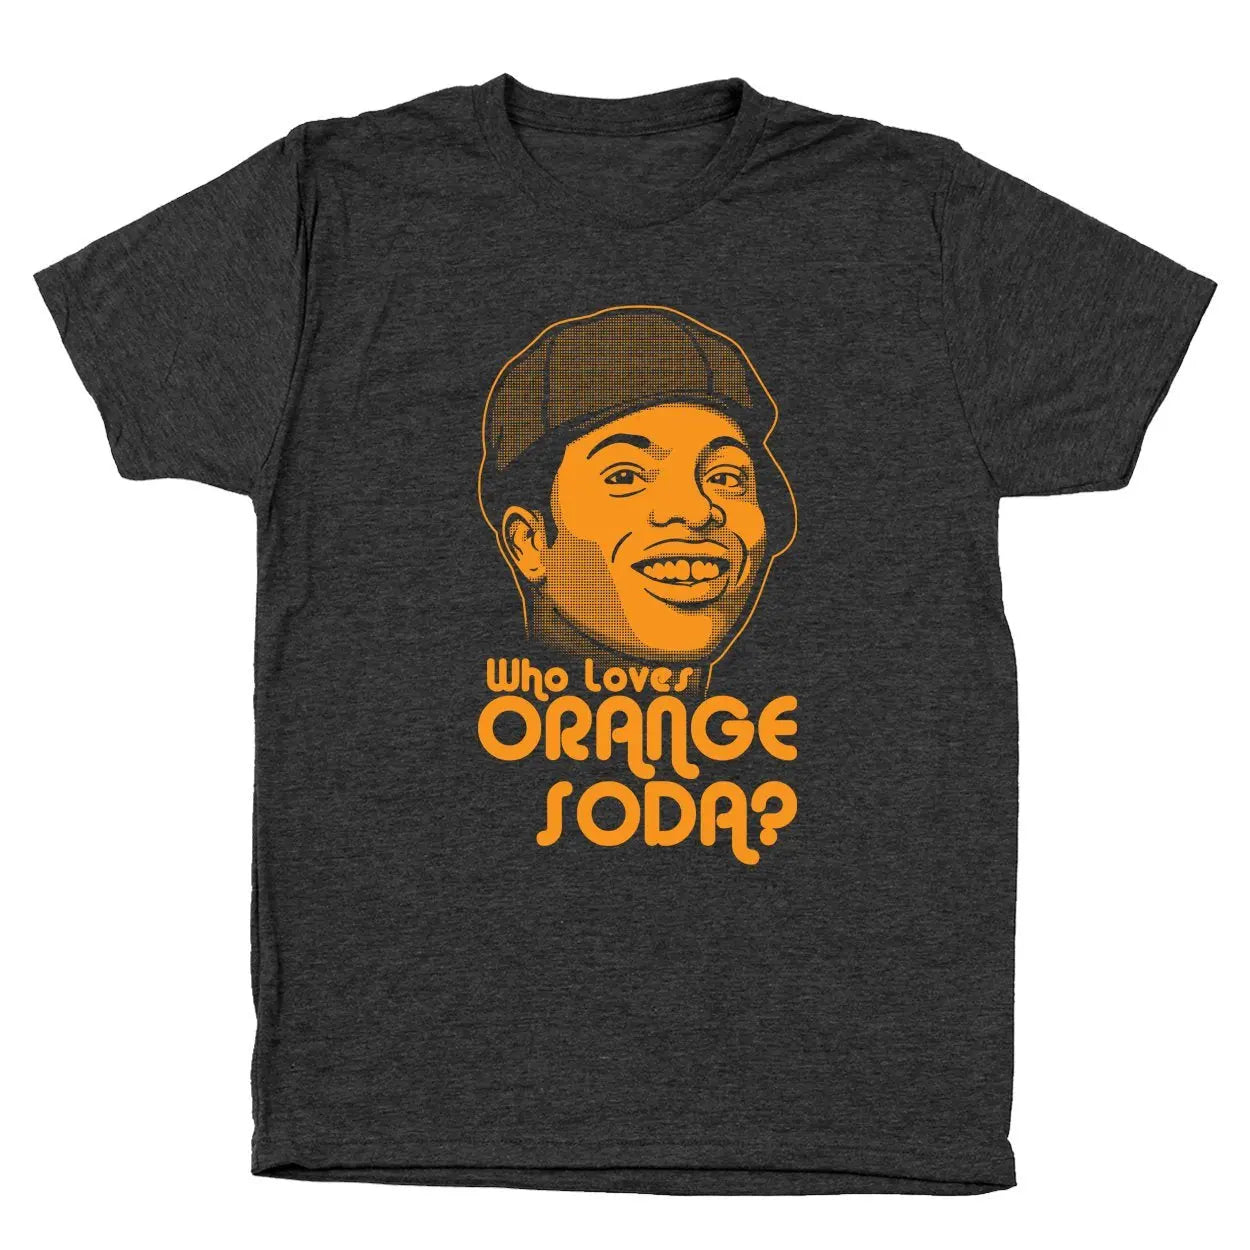 Who Loves Orange Soda Tshirt - Donkey Tees